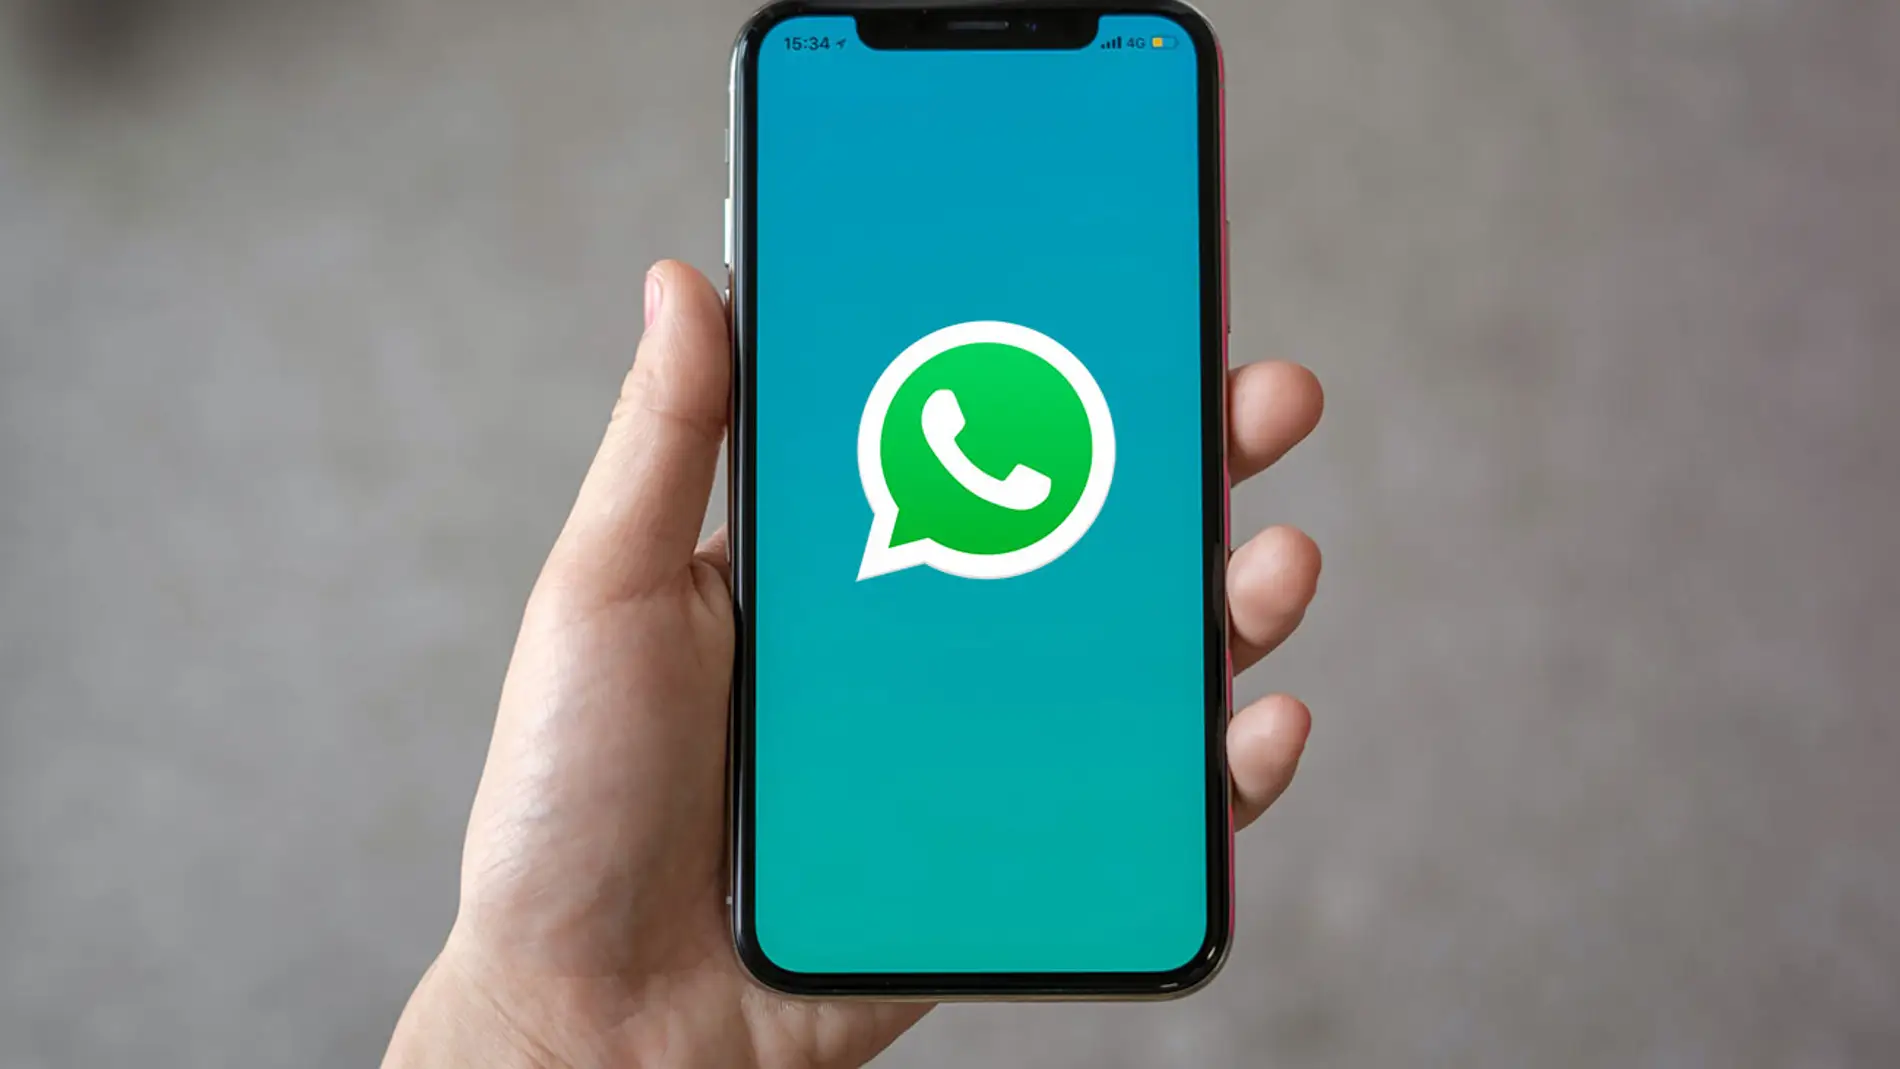 WhatsApp en un móvil